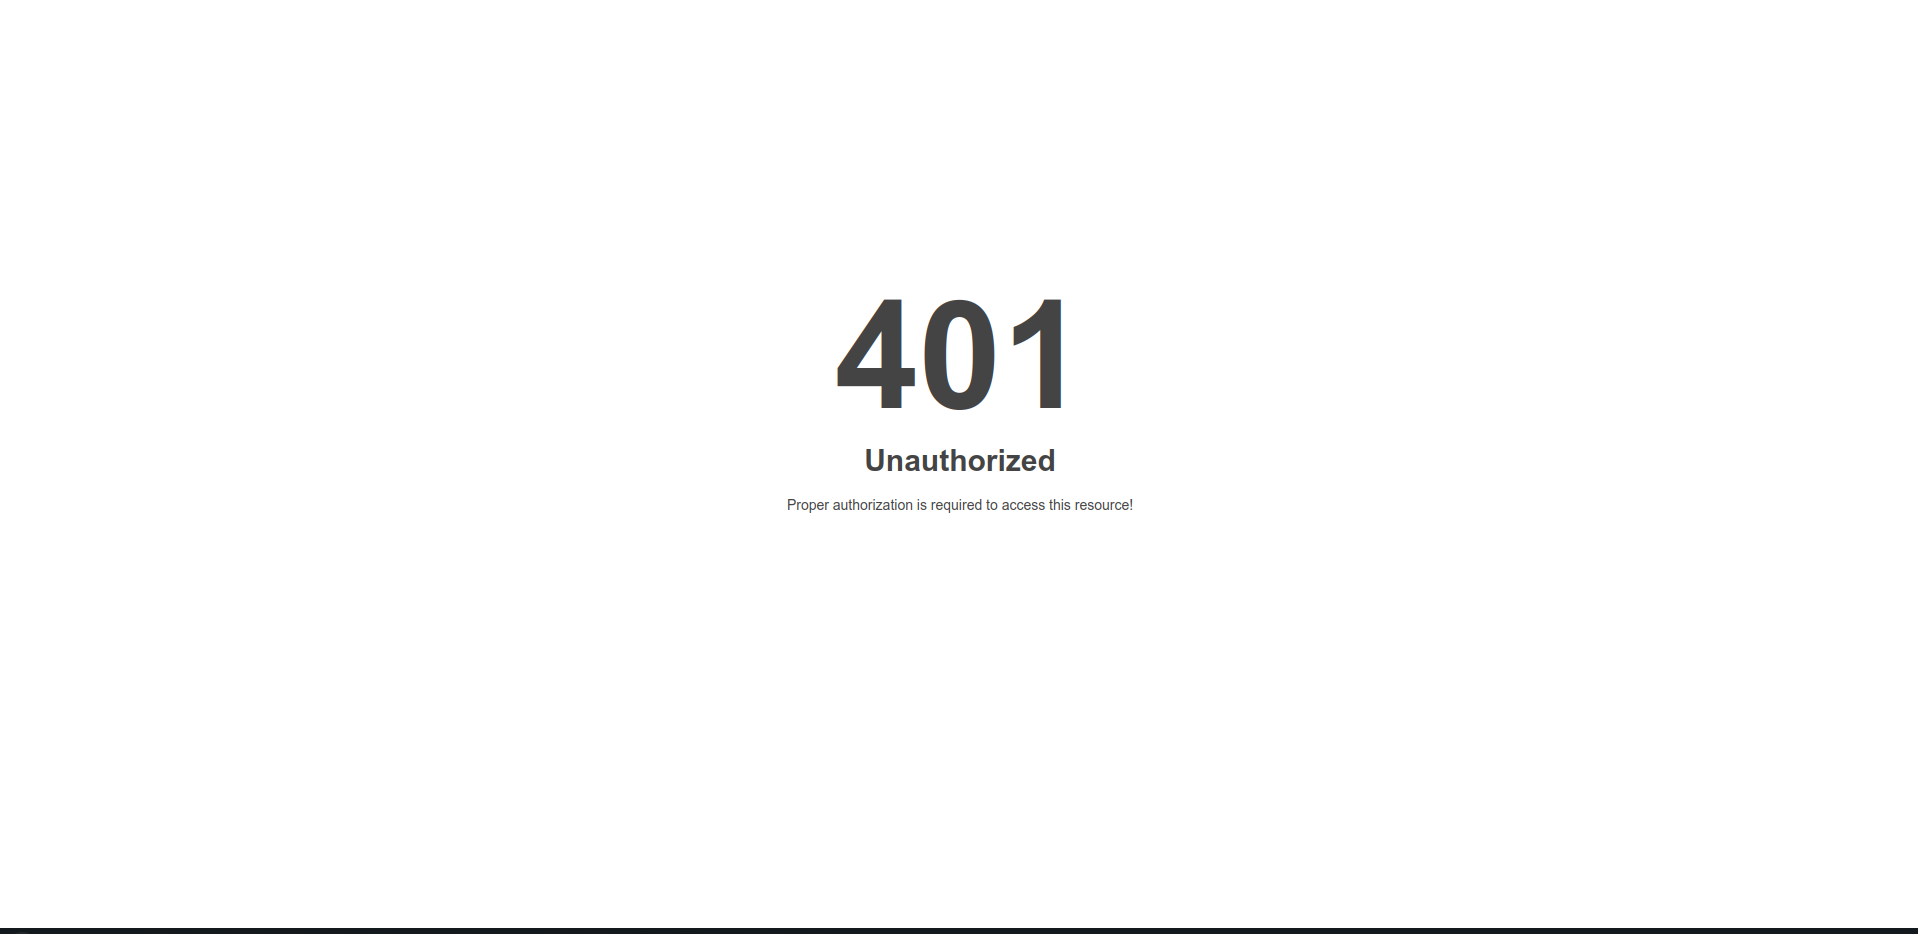 WordPress: 401 unauthorized error after log in attempt